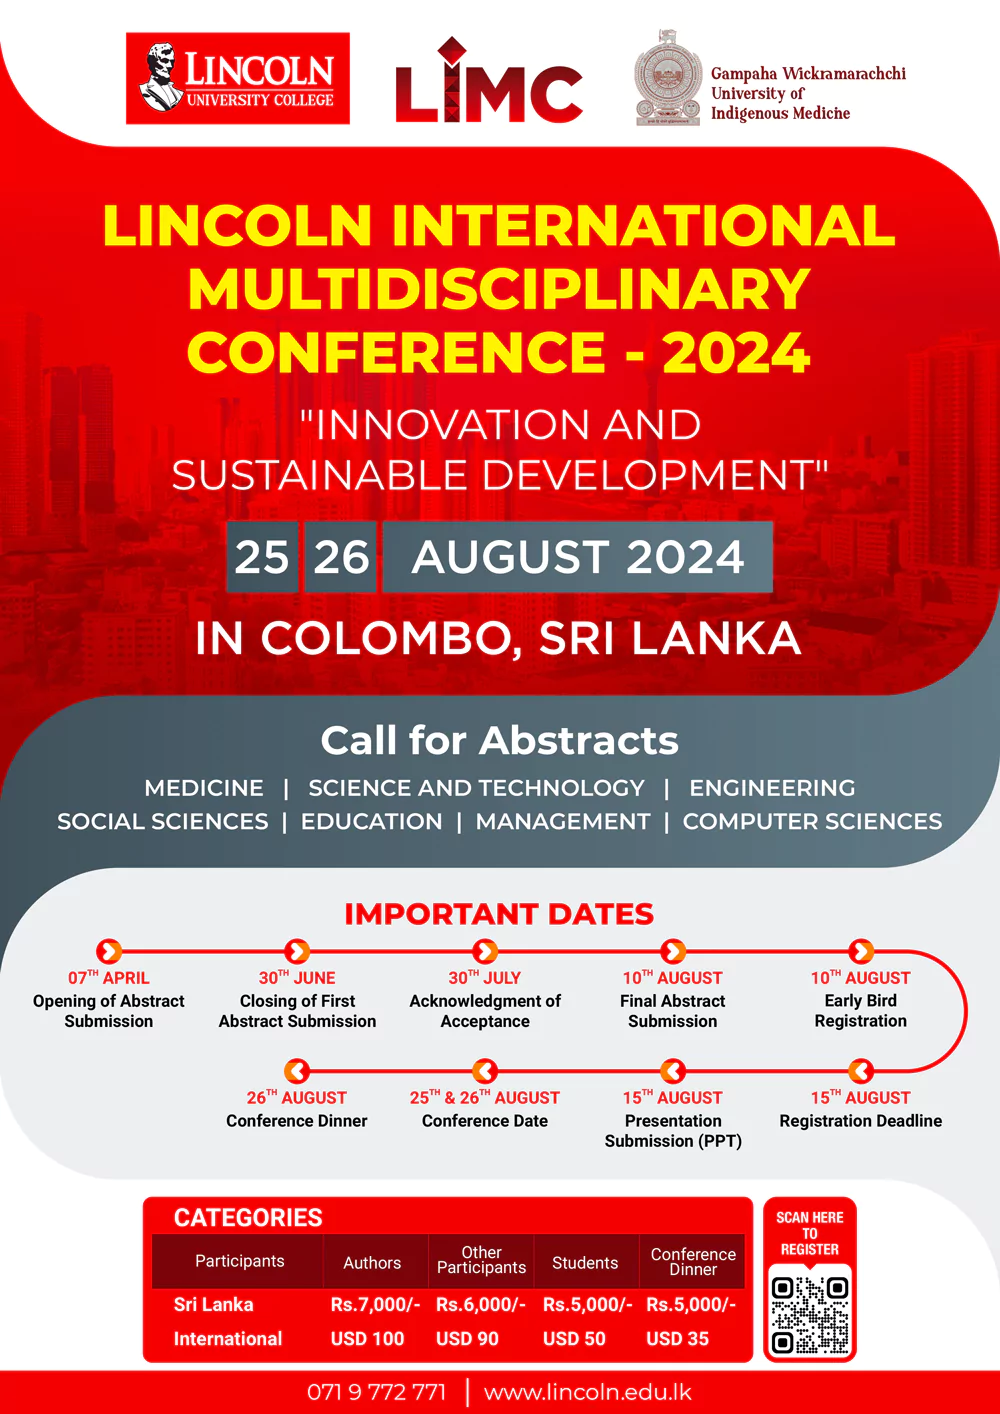 Lincoln International Multidisciplinary Conference (LIMC) 2024 Lincoln University College In Collaboration With Gampaha Wickramarachchi University Of Indigenous Medicine, Sri Lanka